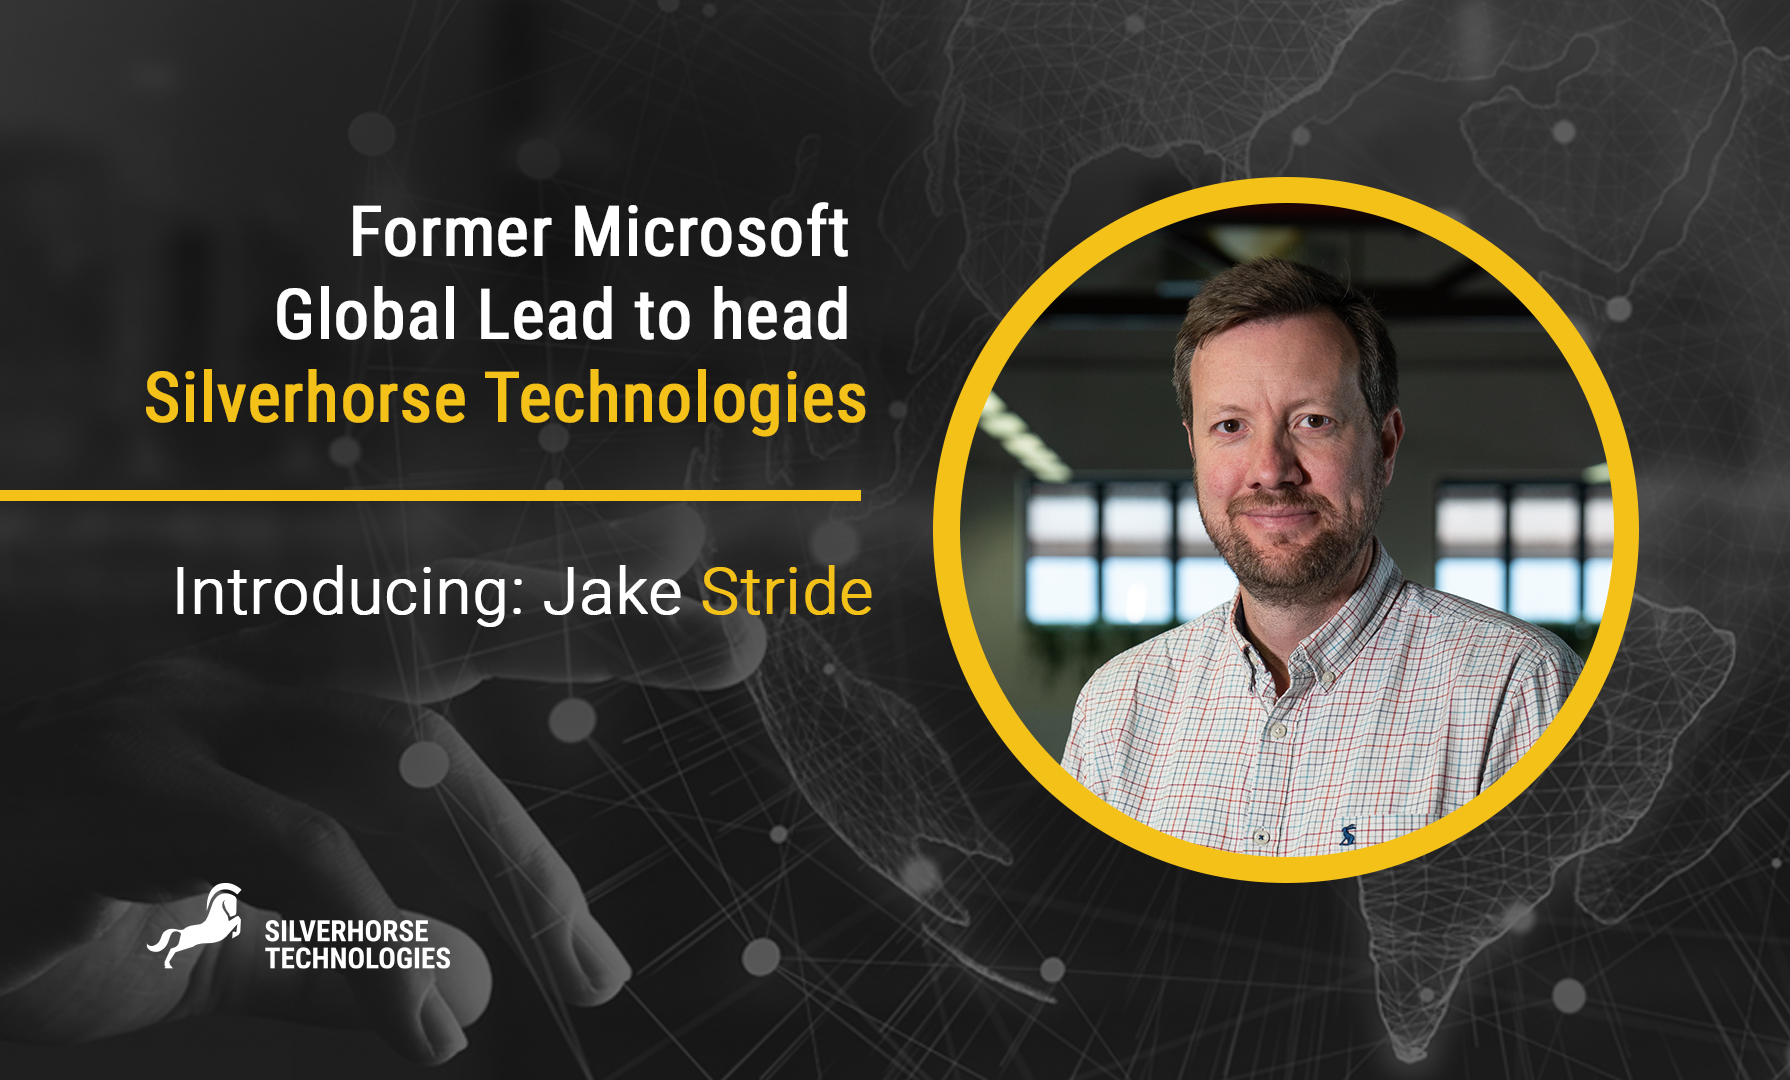 Microsoft’s Jake Stride to head Silverhorse Technologies